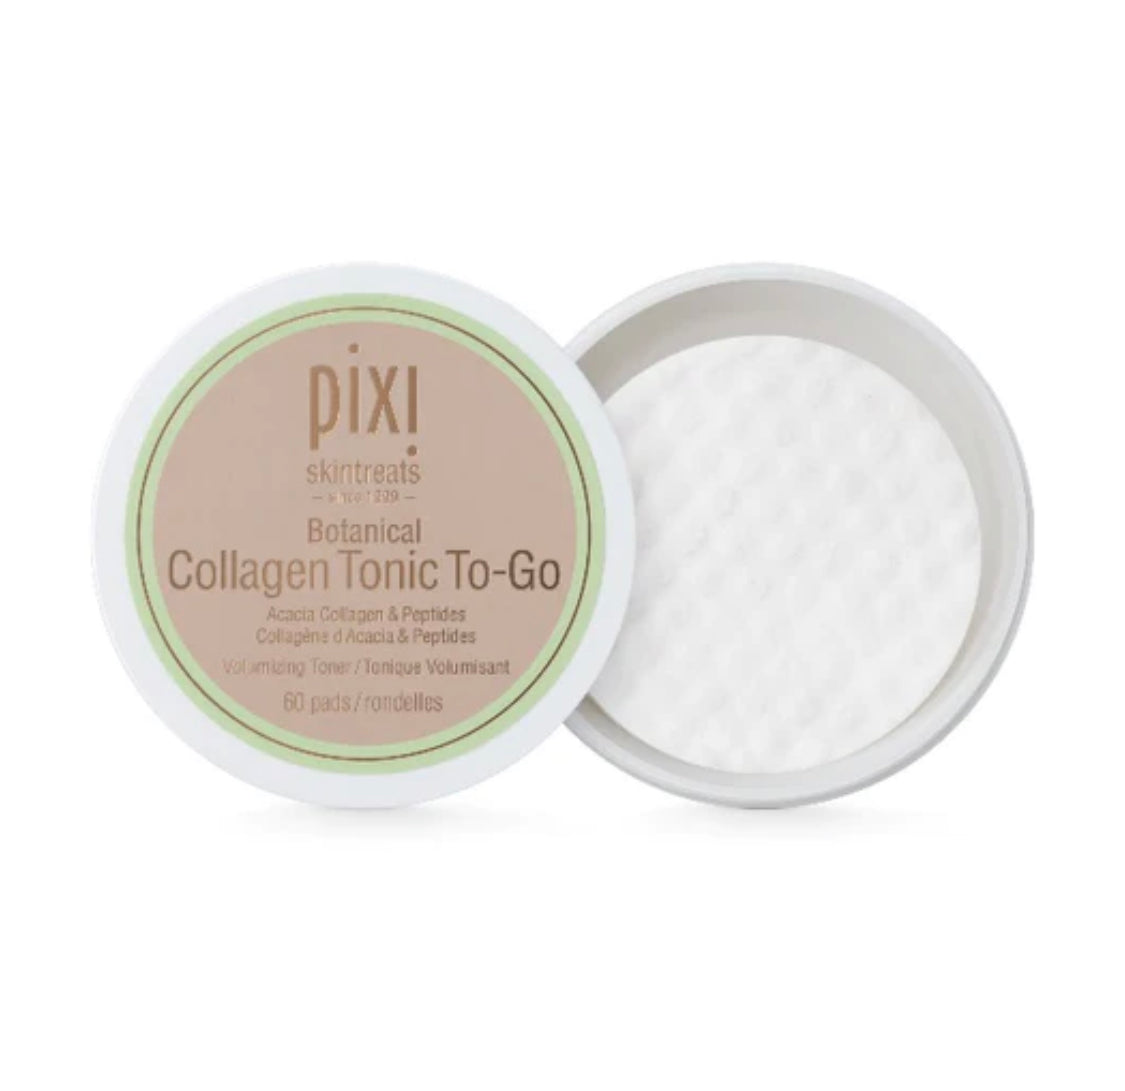 PIXI Beauty Botanical Collagen Tonic To-Go